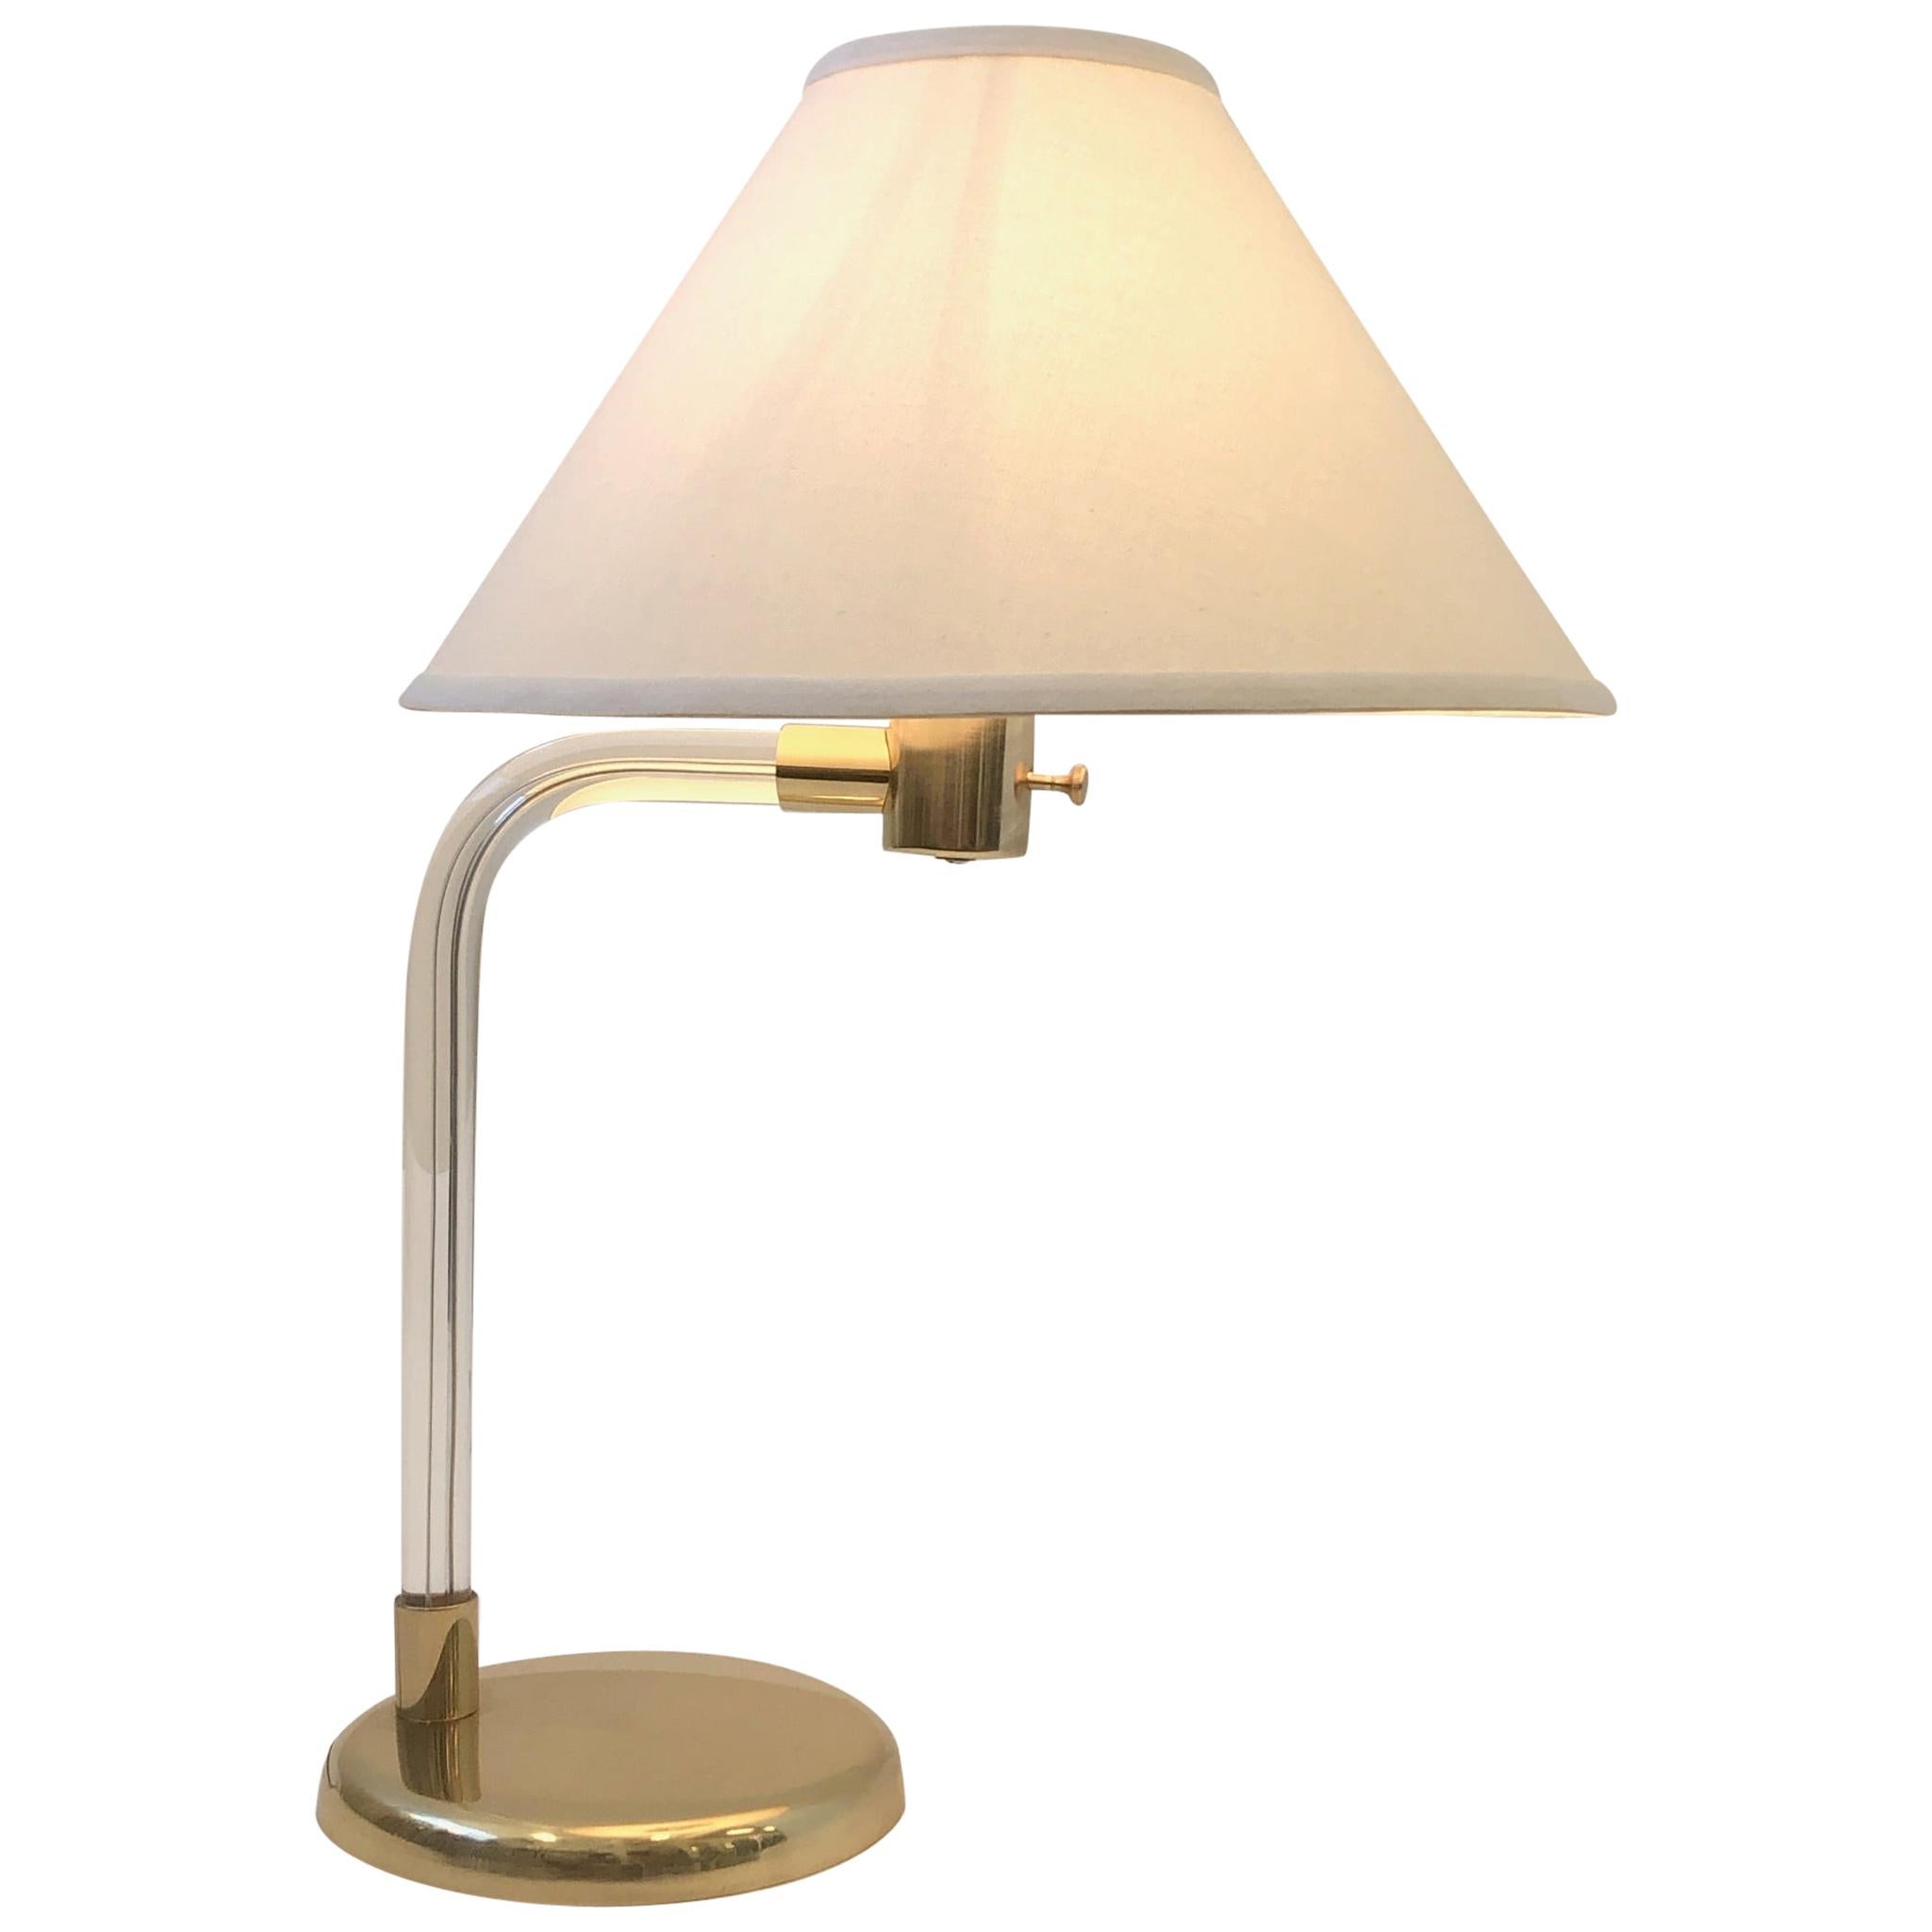 Polish Brass and Acrylic Table Lamp by Peter Hamburger